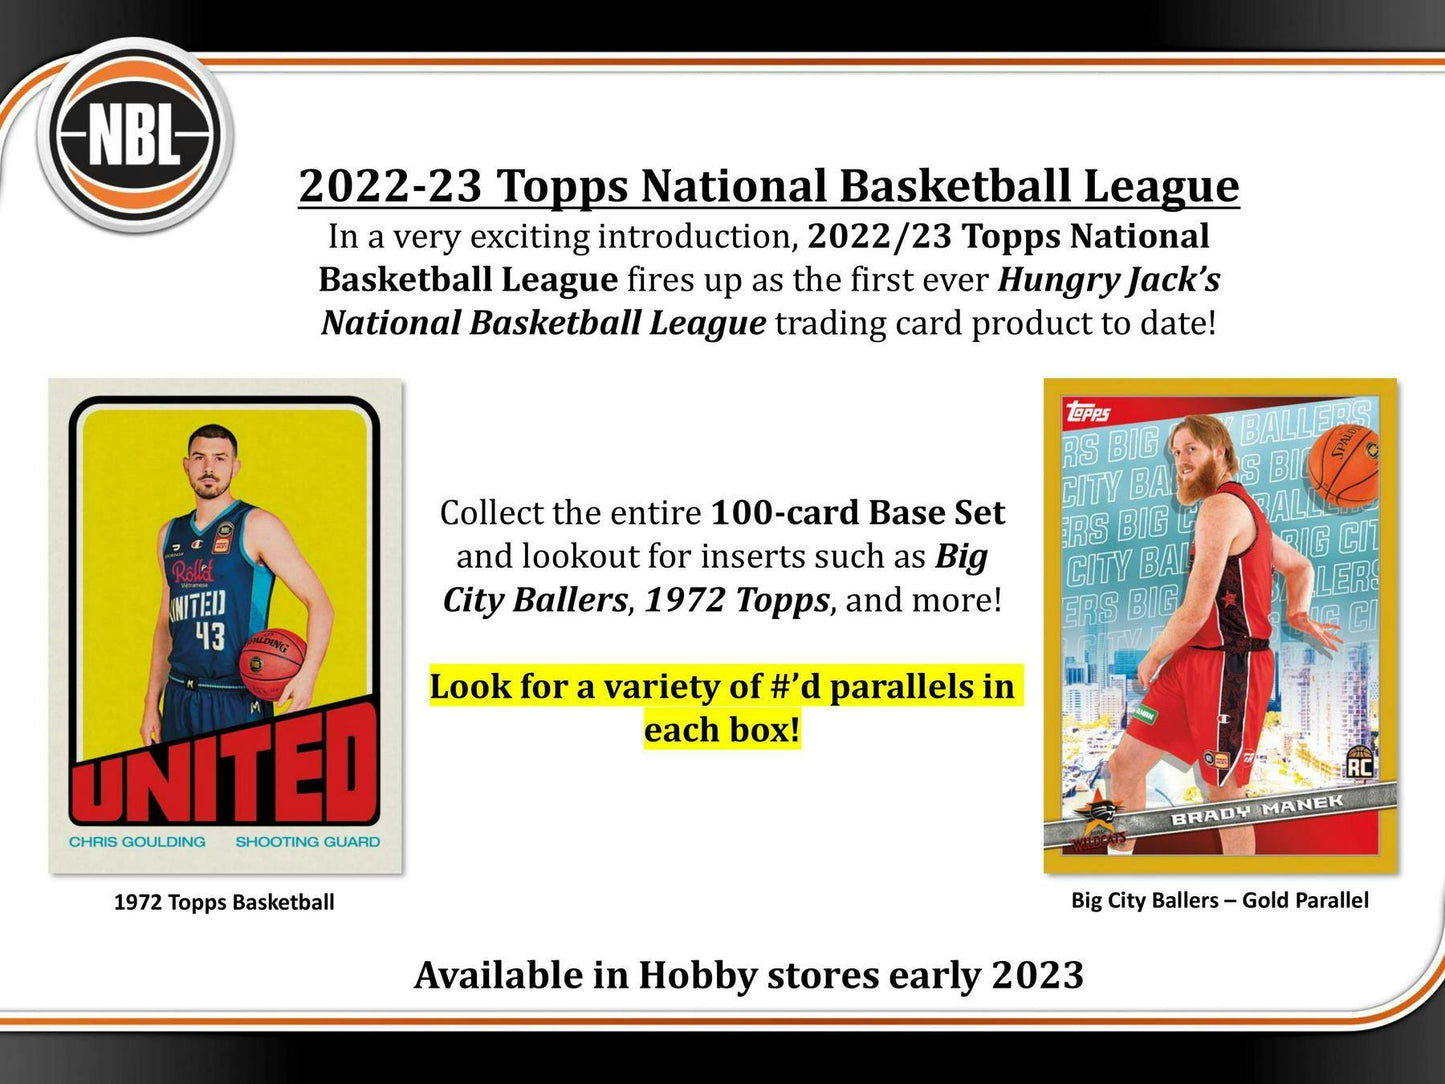 2022-23 Topps NBL Basketball, Hobby Box